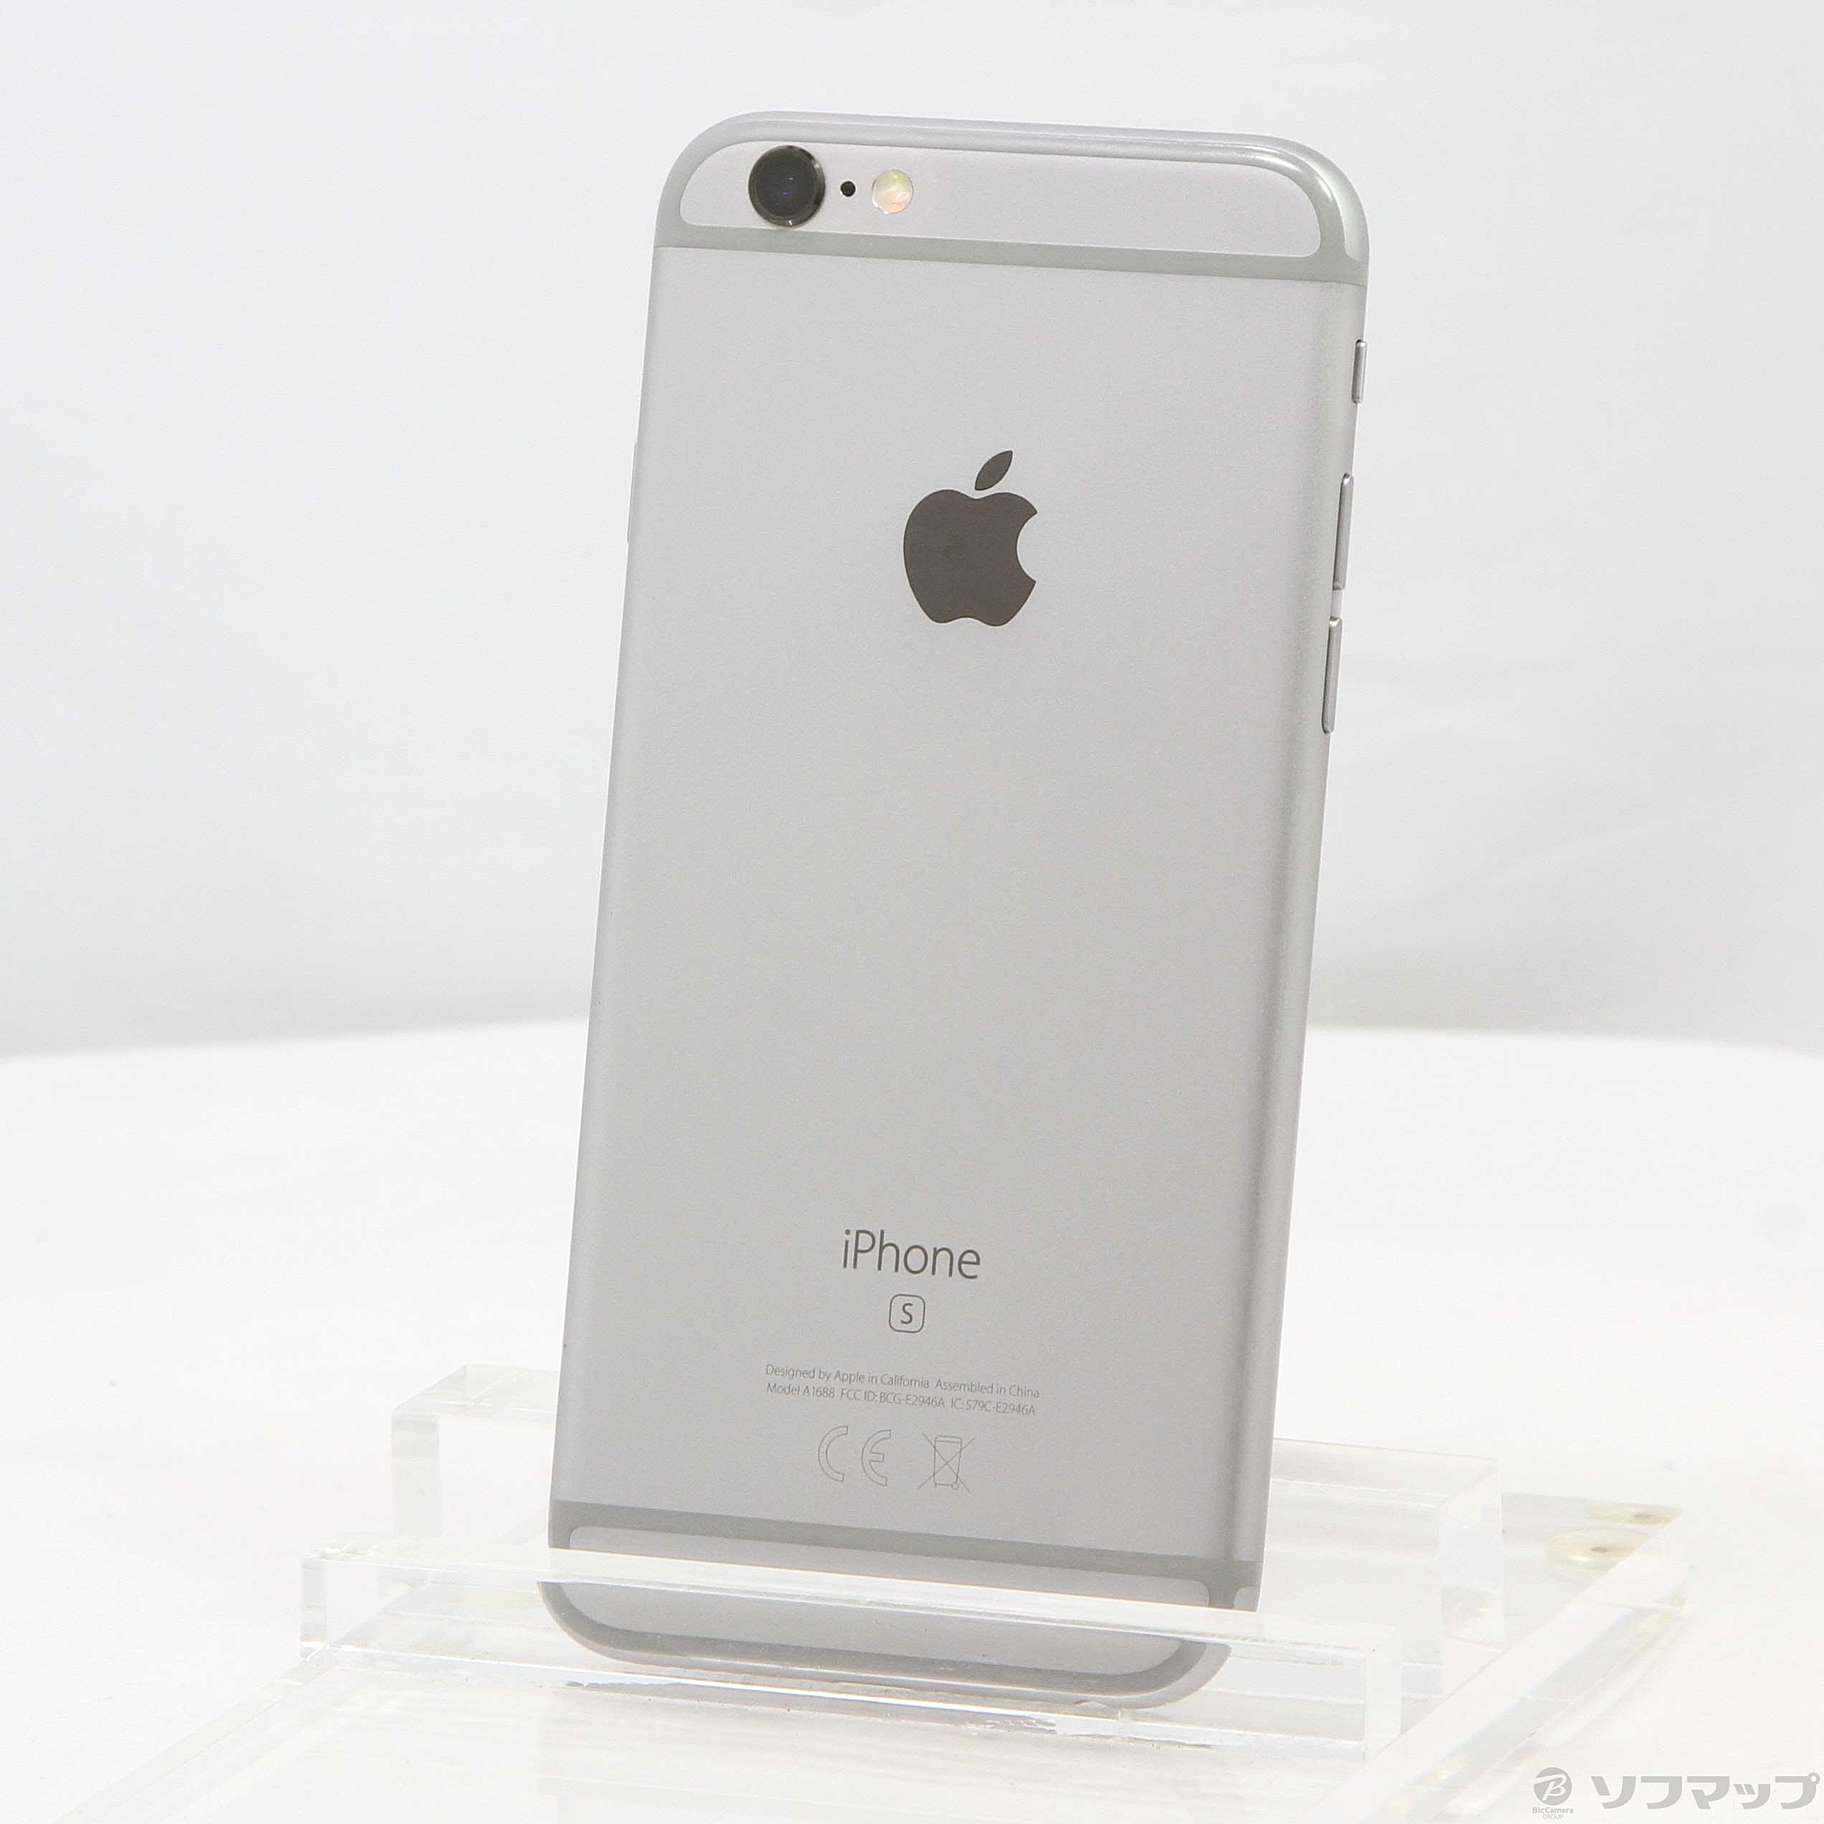 iPhone 6s Space Gray 128 GB SIMフリー